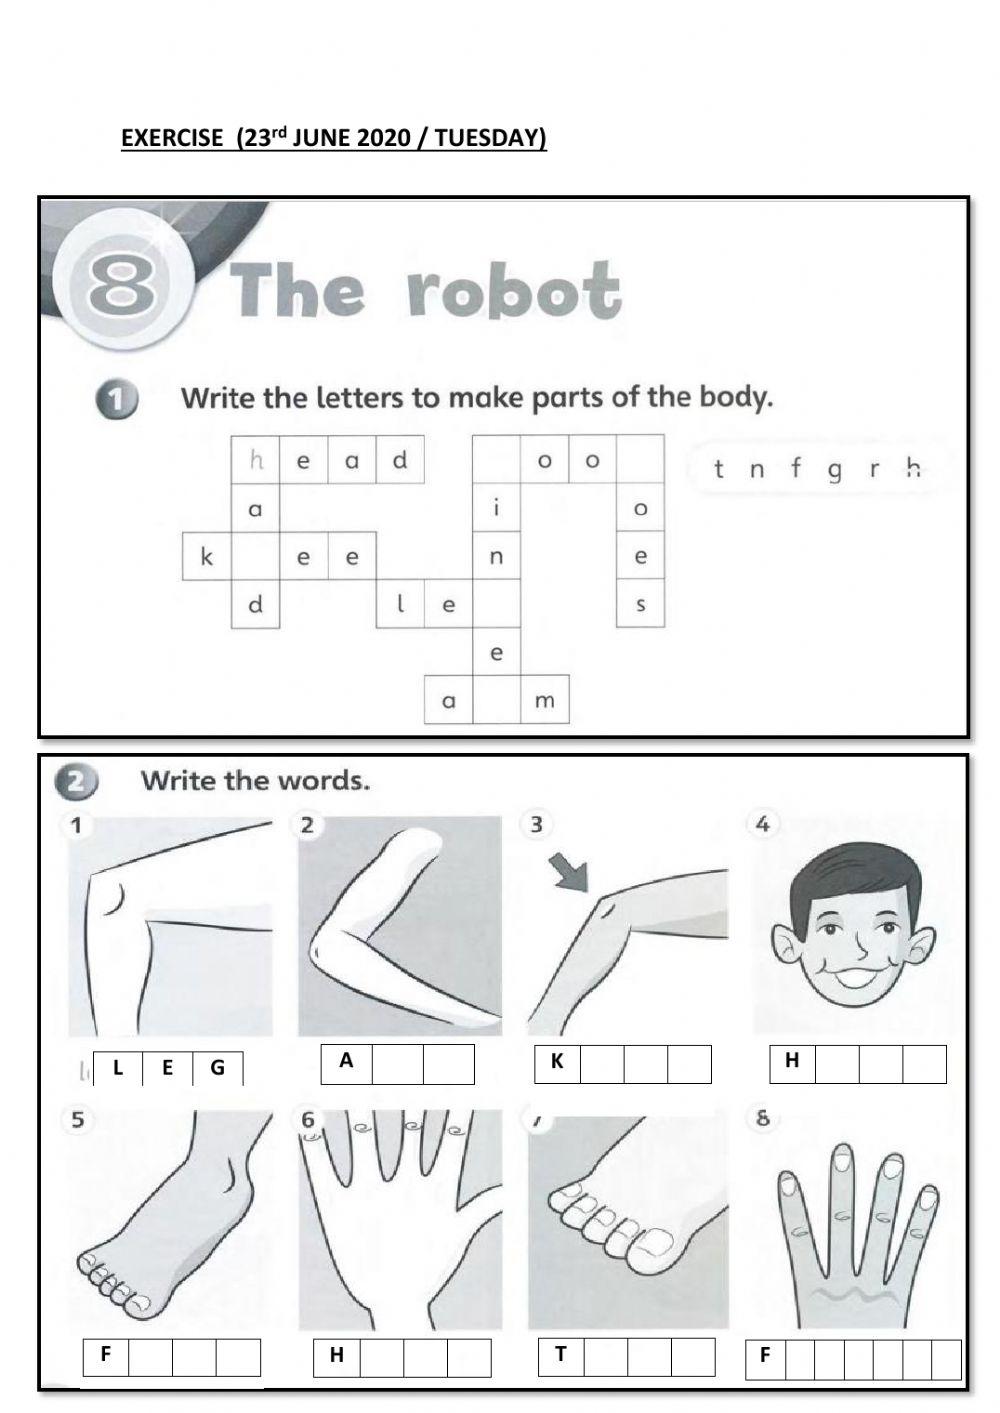 The robot